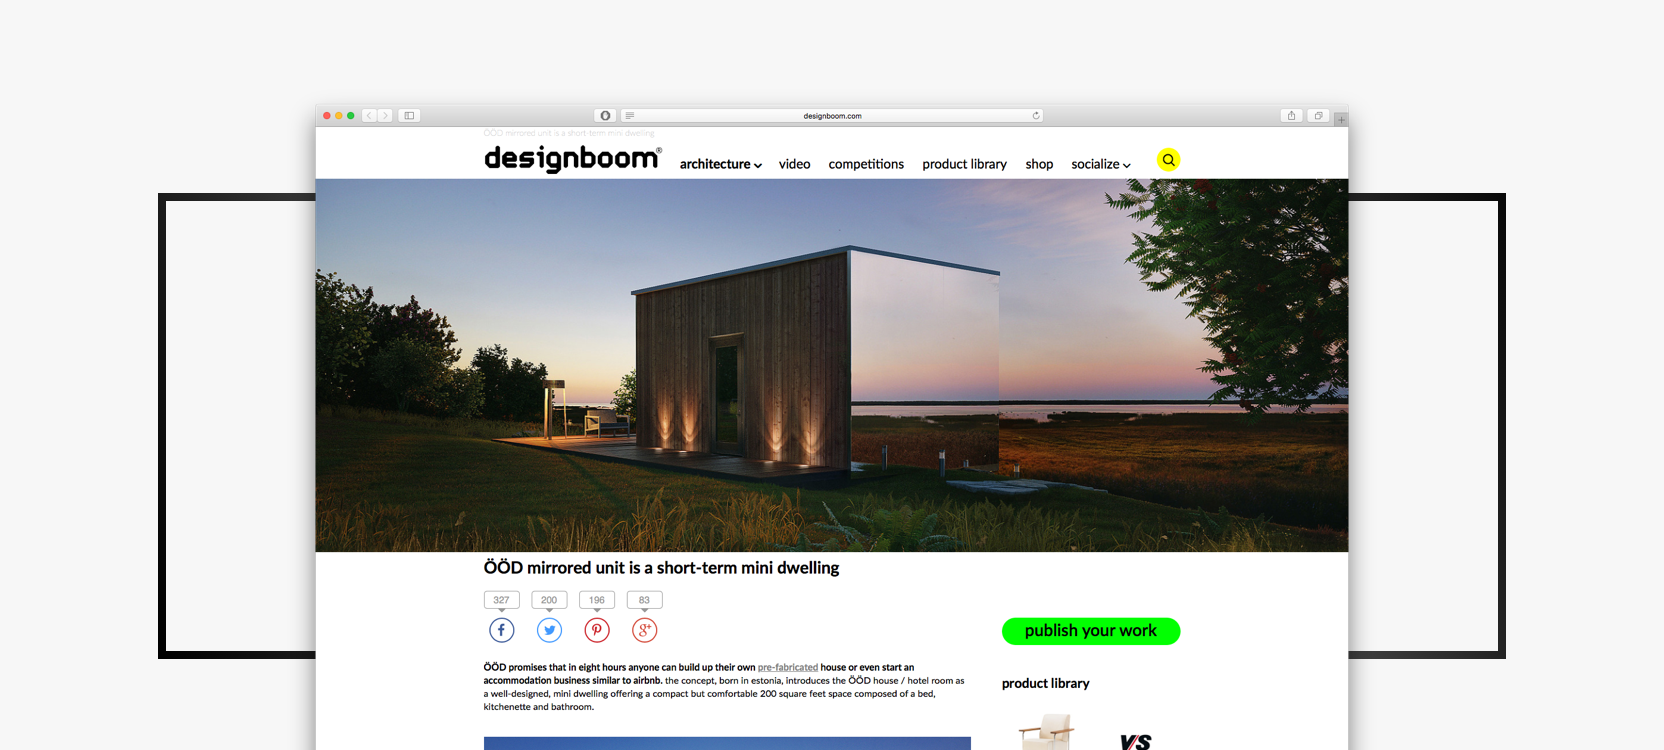 Designboom - ÖÖD mirrored unit is a short-term mini dwelling